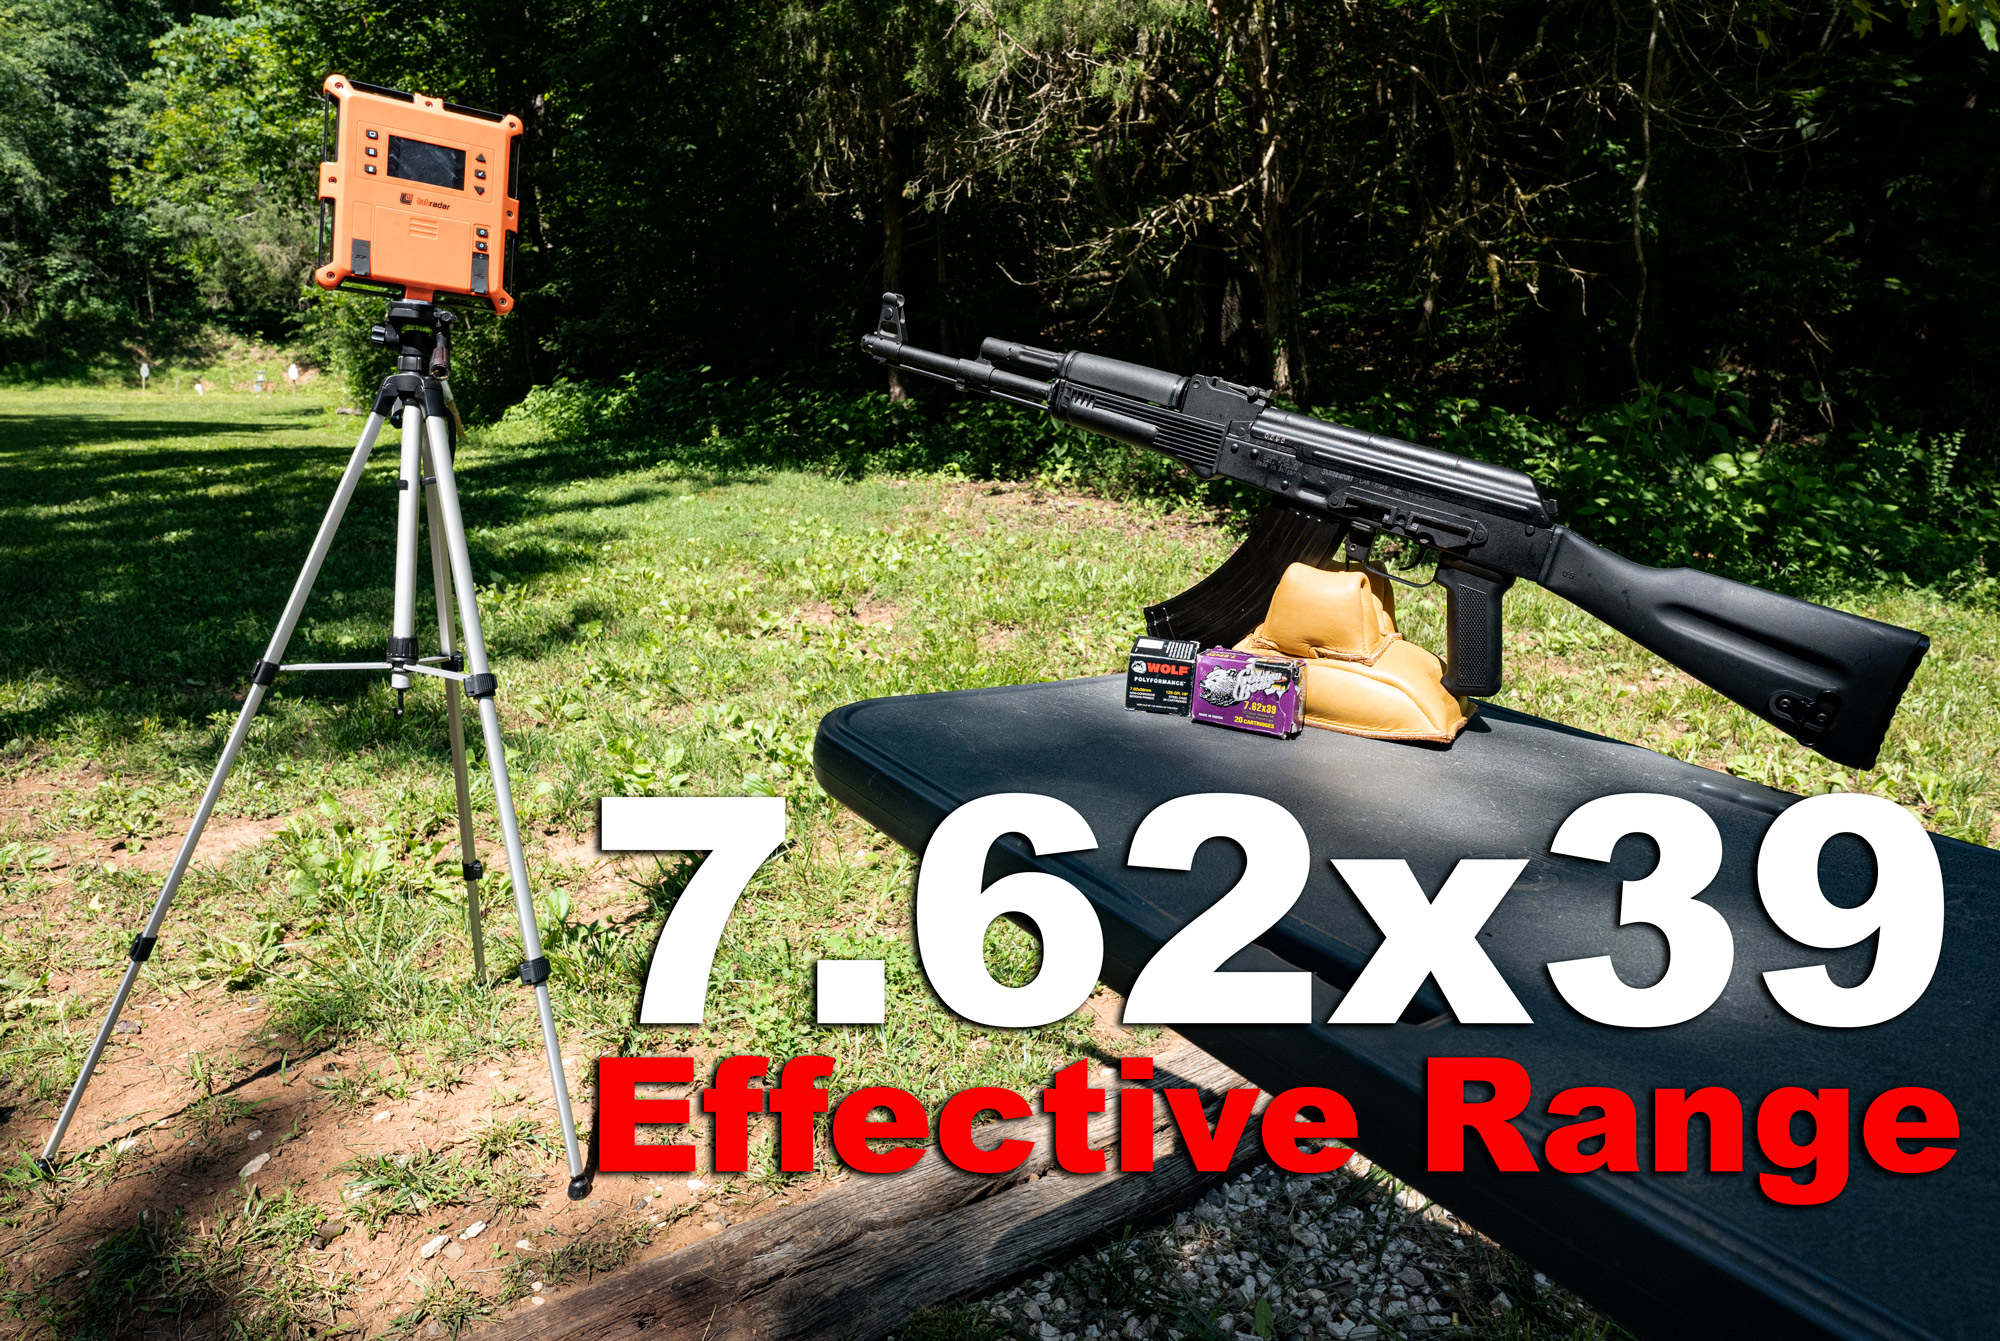 AK-47 with chronograph testing 7.62x39 effective range